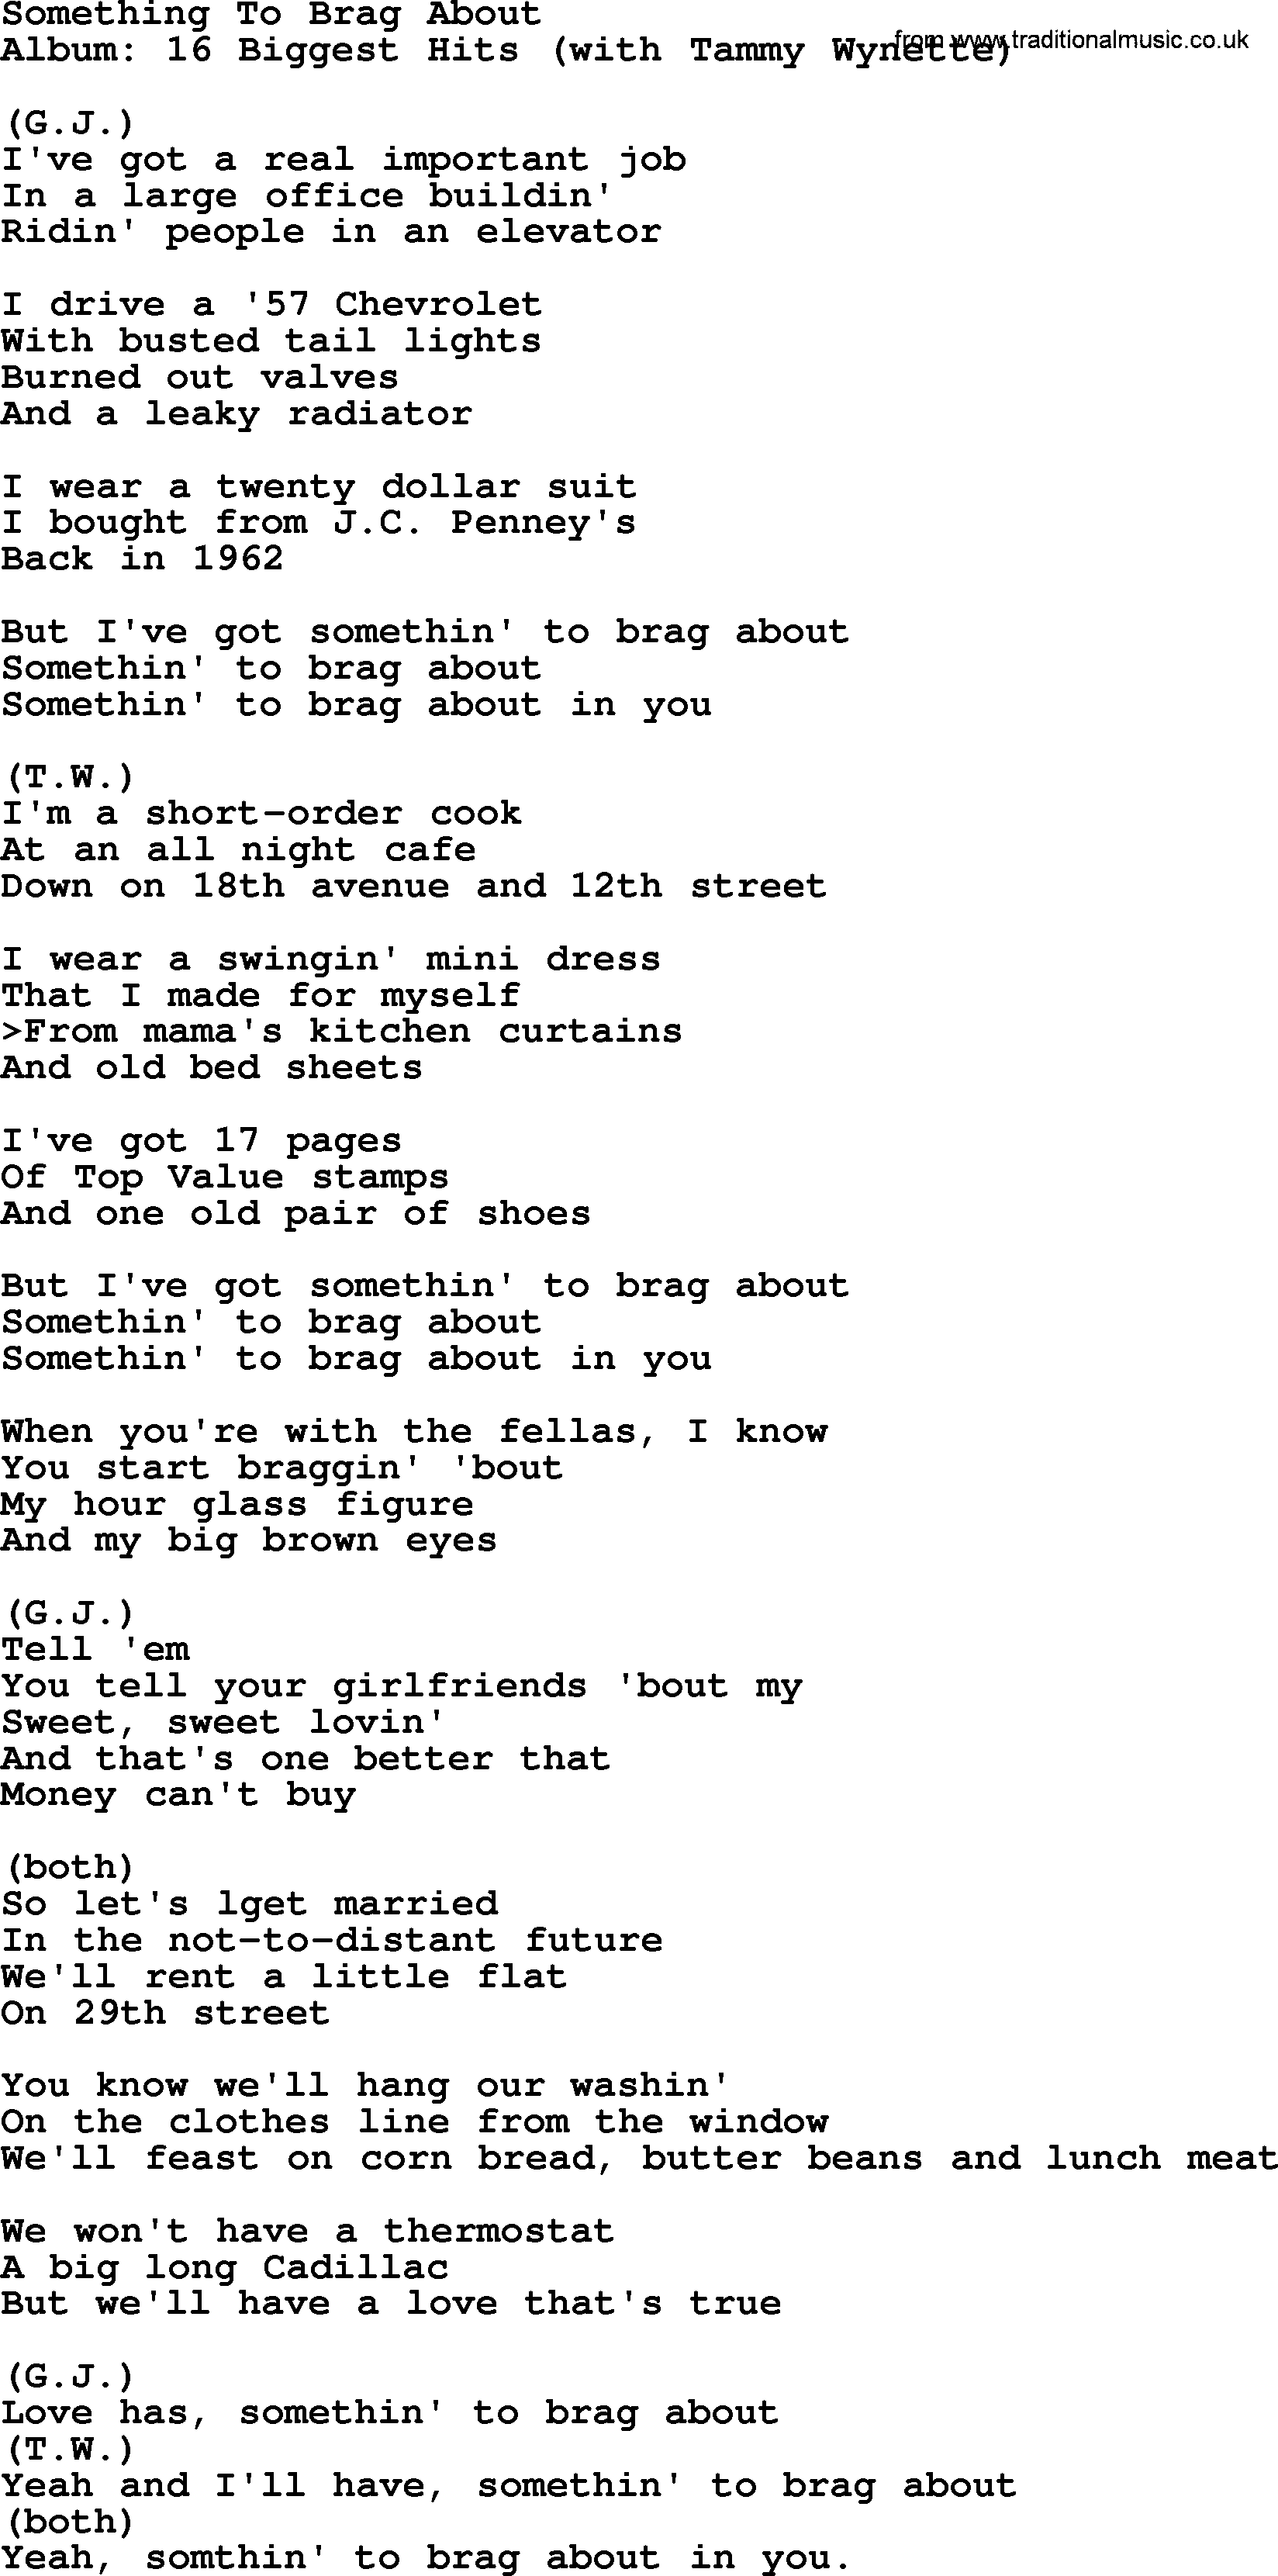 George Jones song: Something To Brag About, lyrics